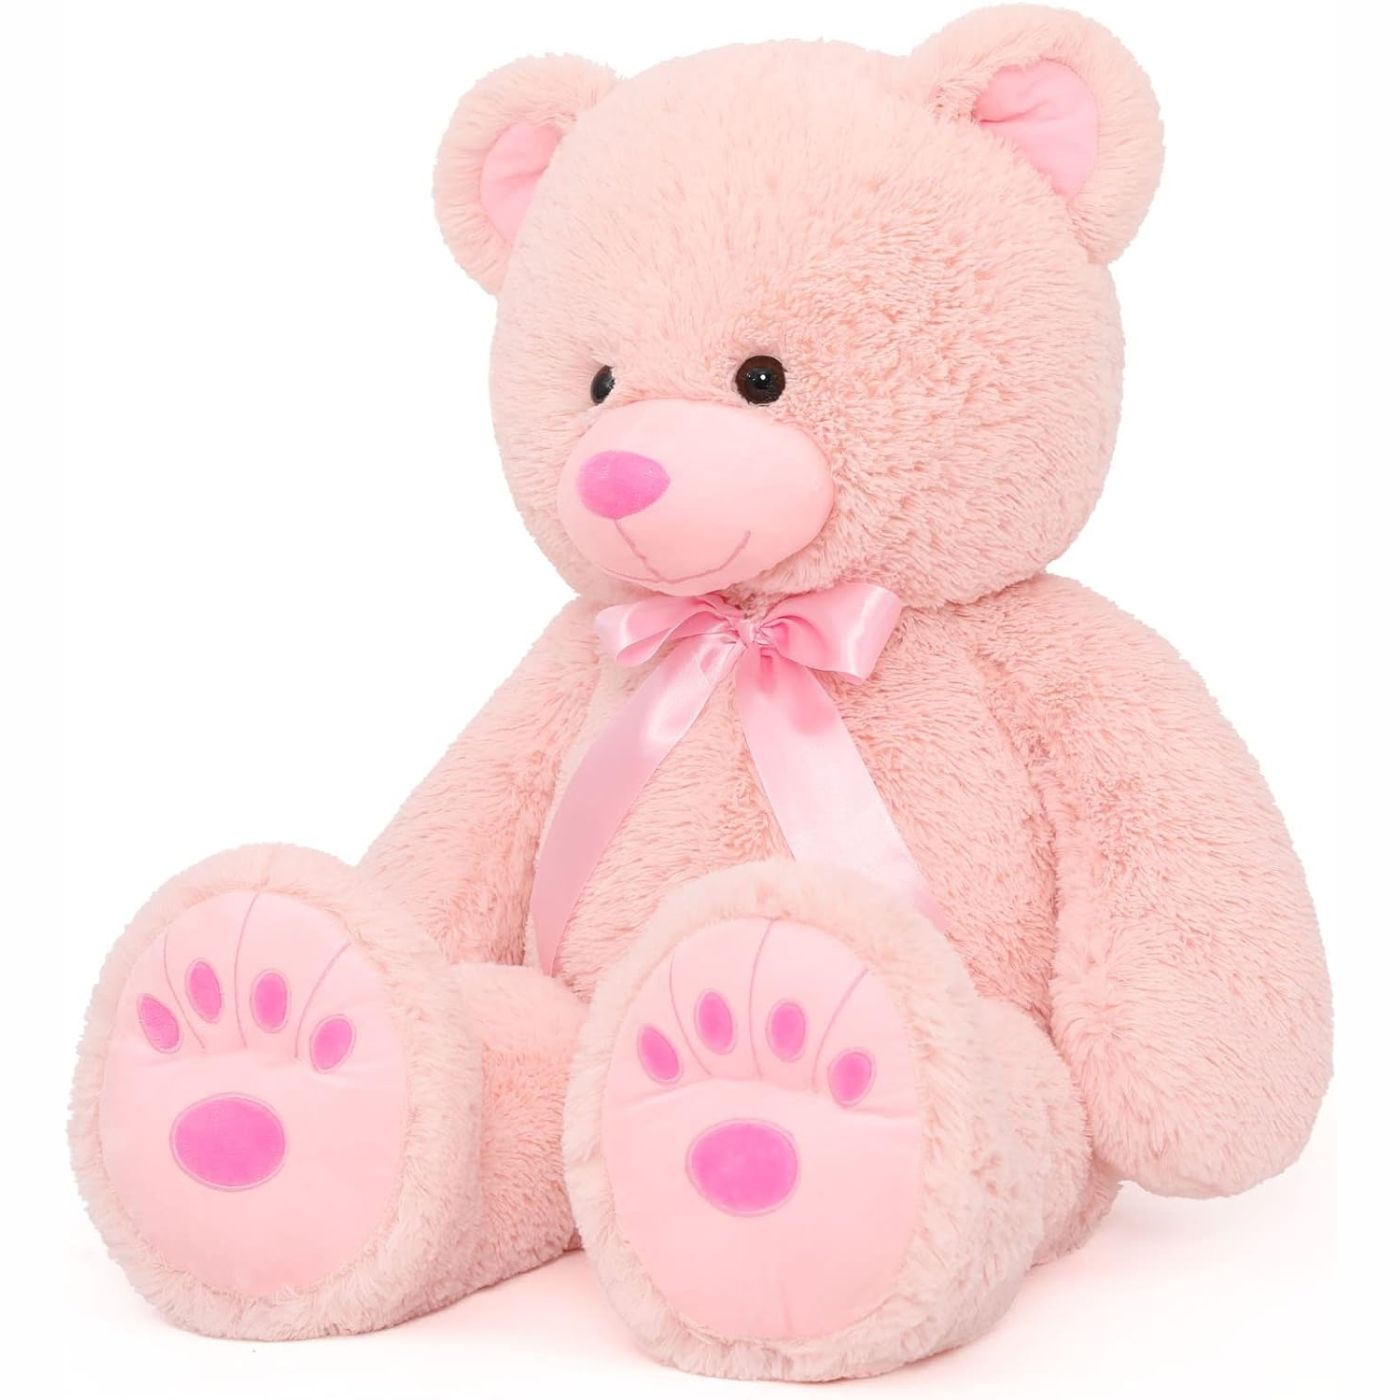 Riesiges Teddybär-Plüschtier, mehrfarbig, 36 Zoll